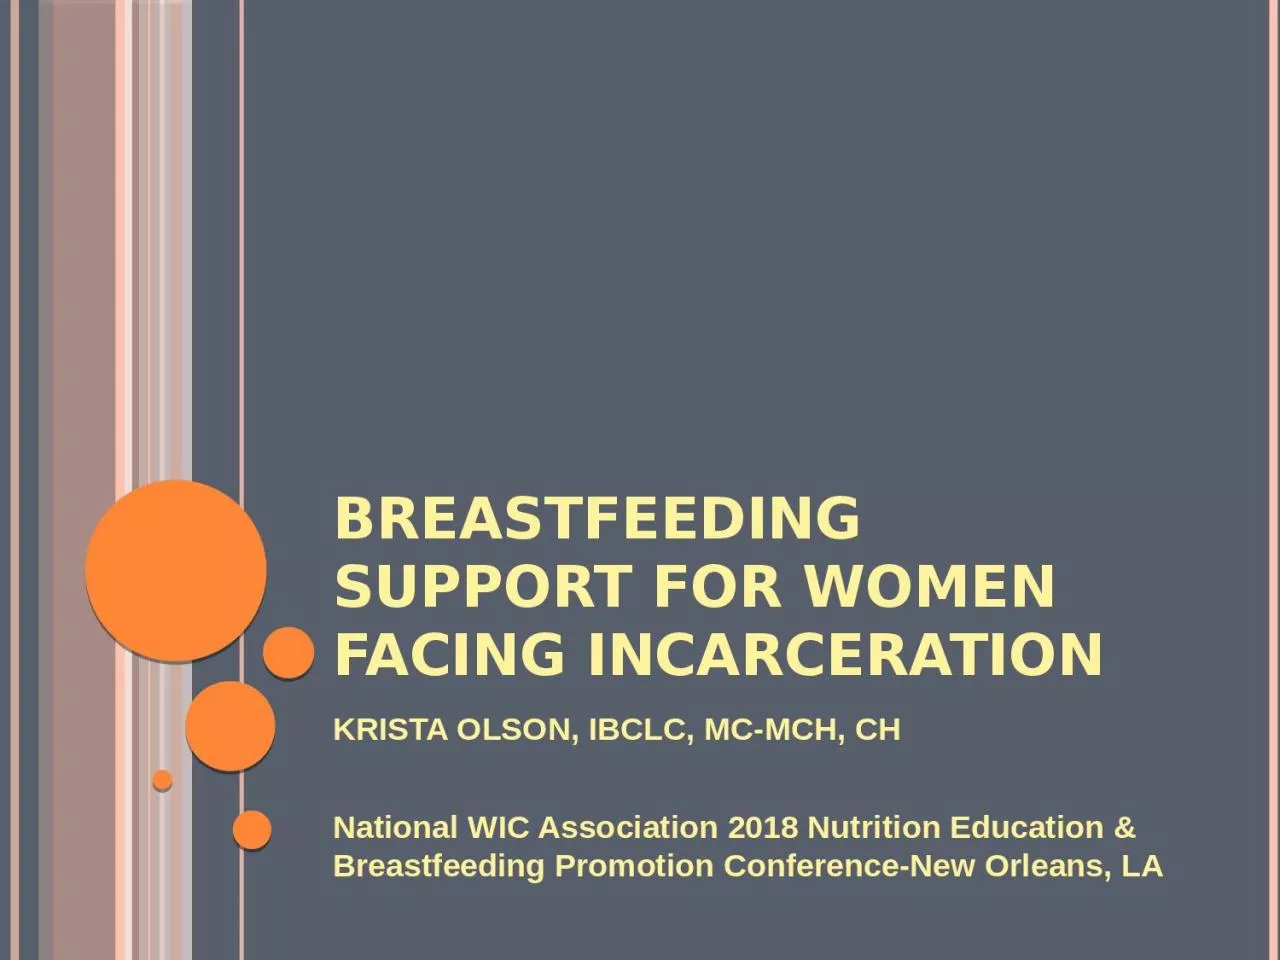 Breastfeeding support for women facing incarceration